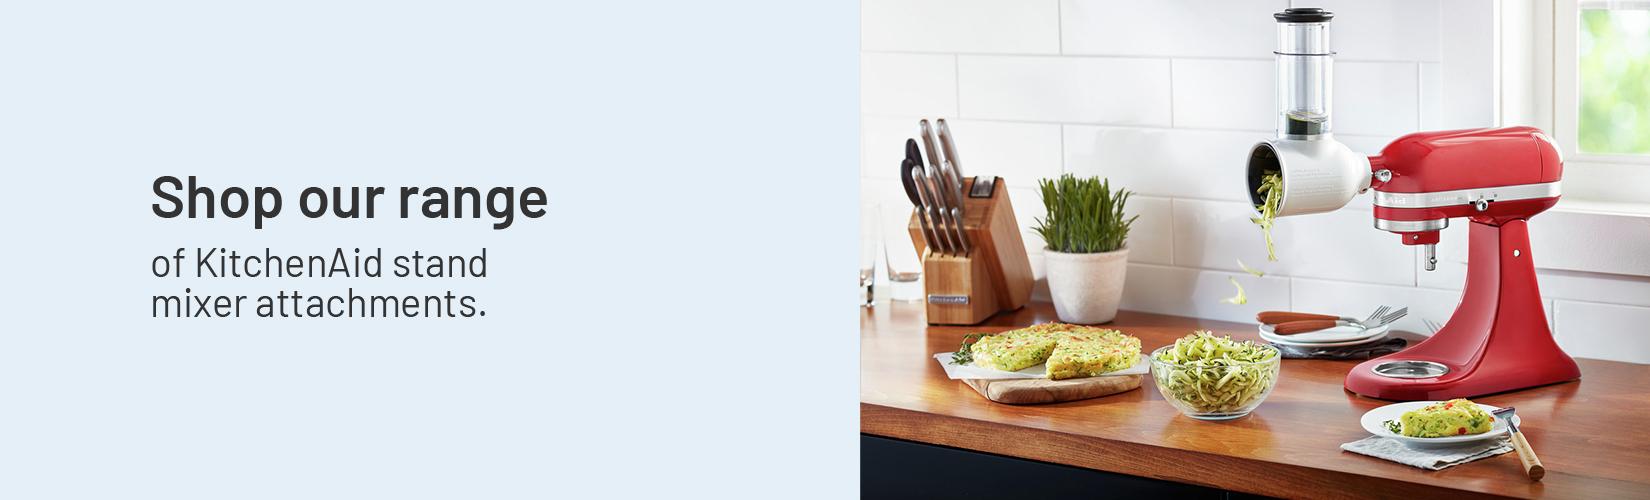 Shop our range of KitchenAid stand mixer attachments.